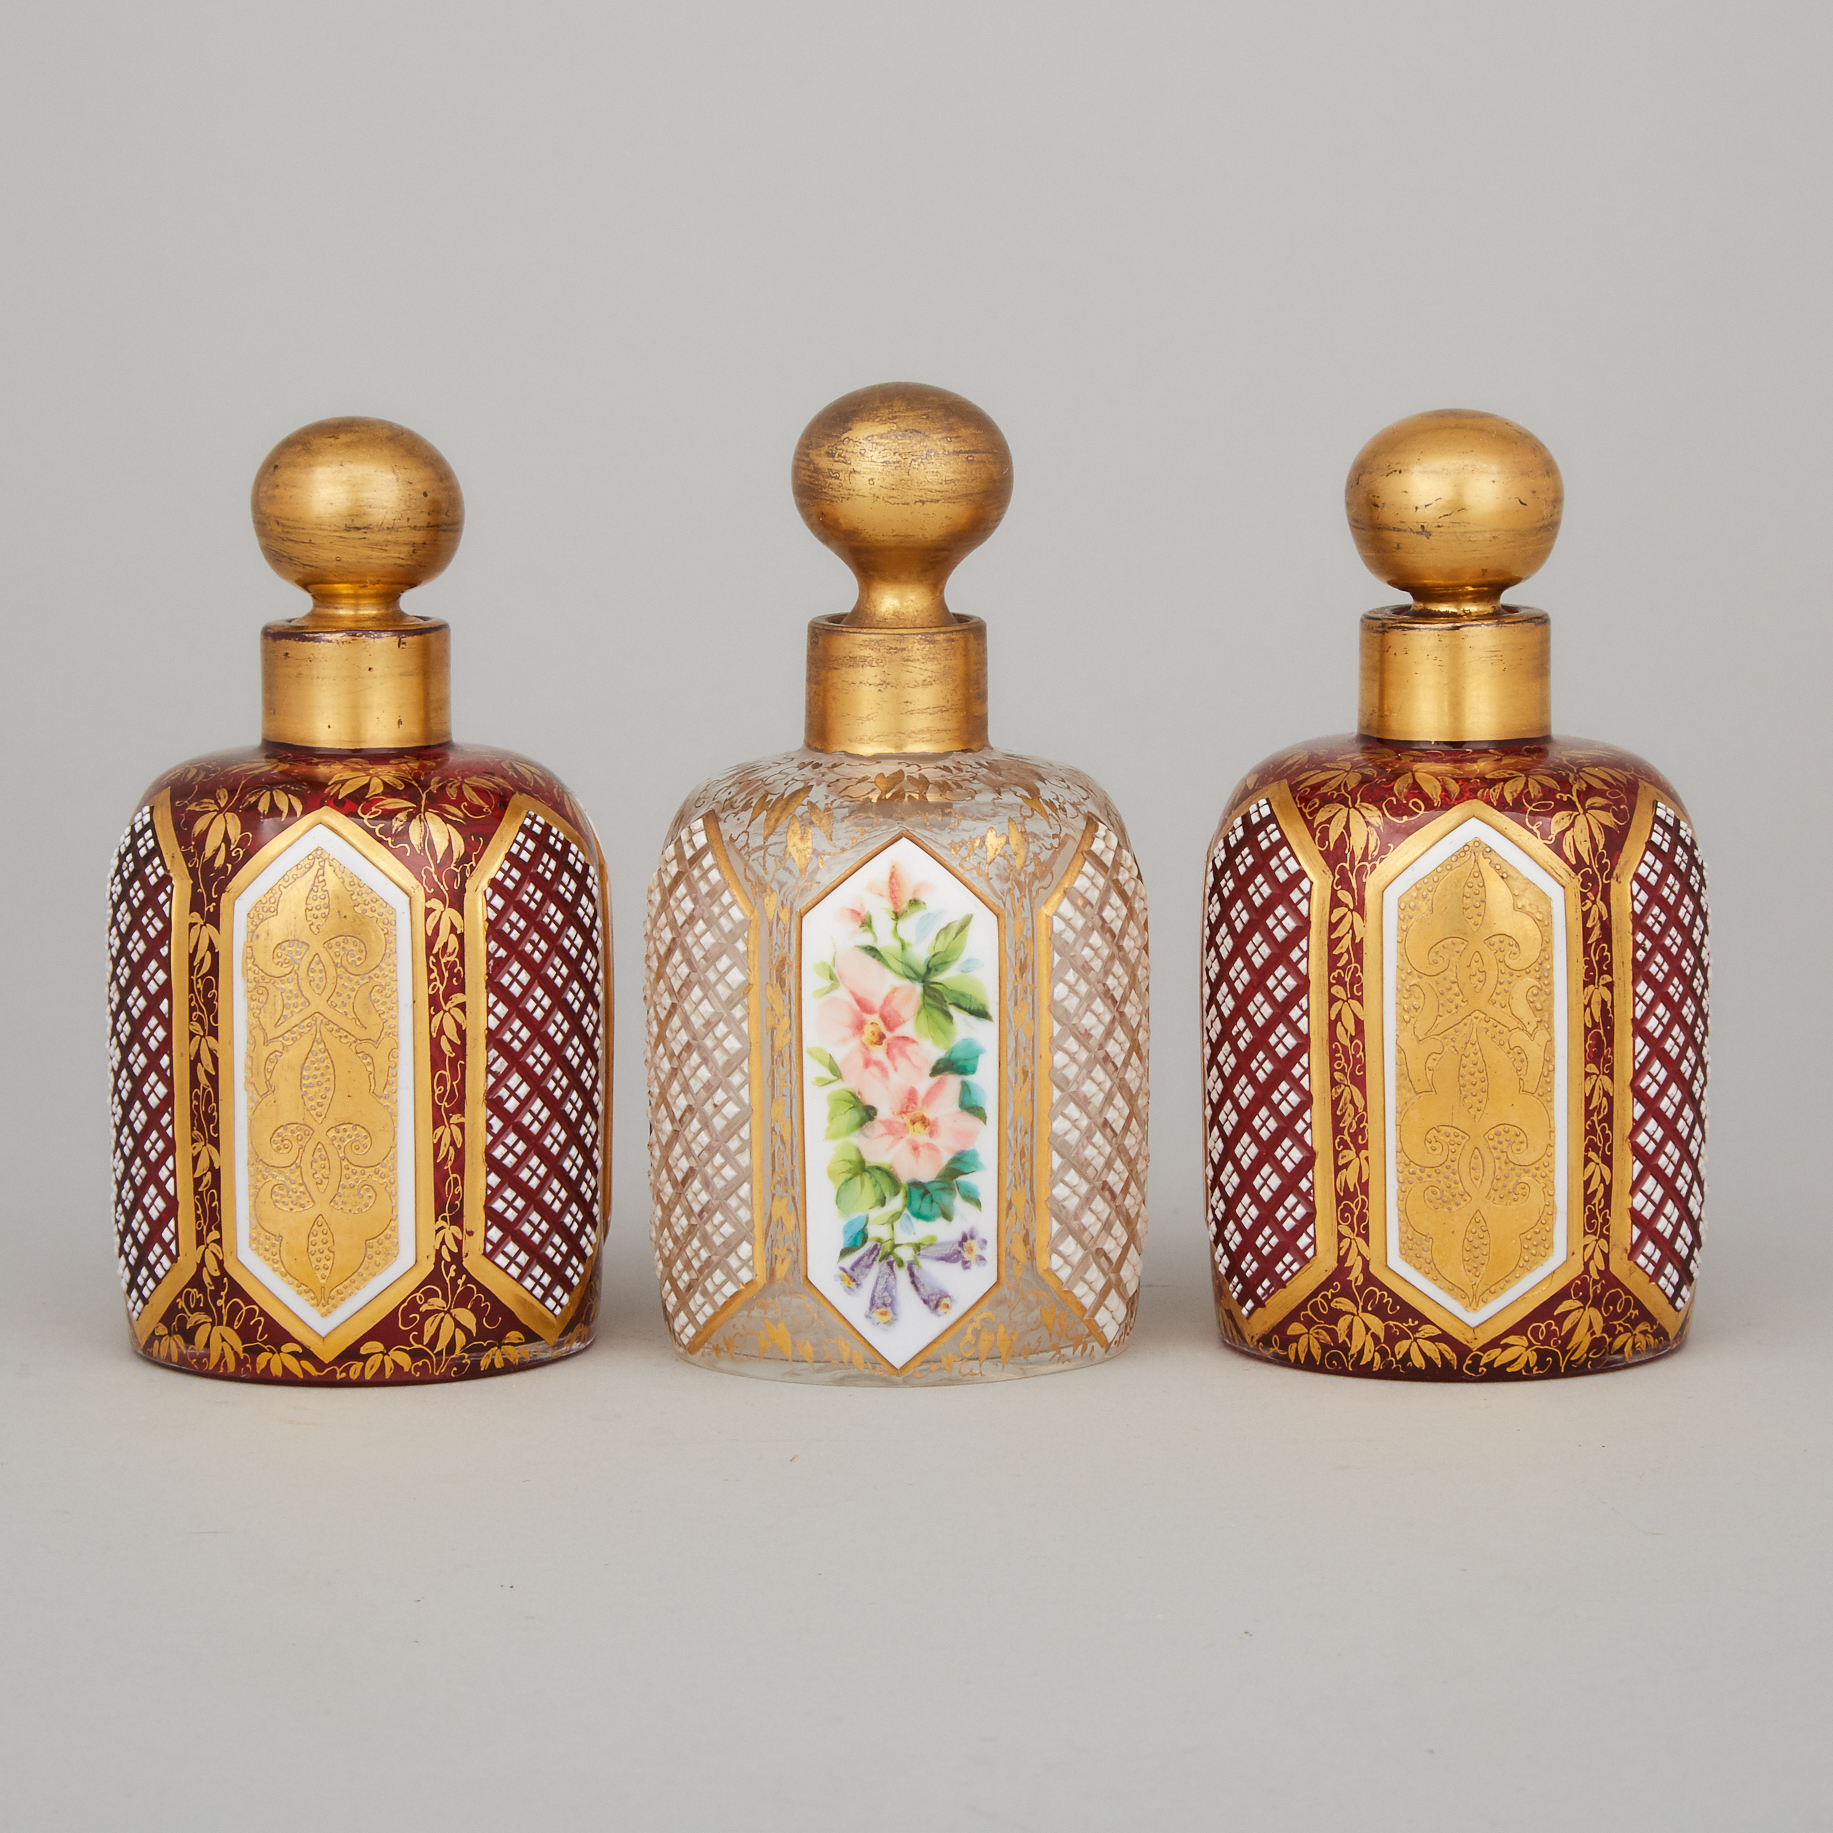 Three Bohemian Overlaid, Enameled and Gilt Glass Perfume Bottles, late 19th century